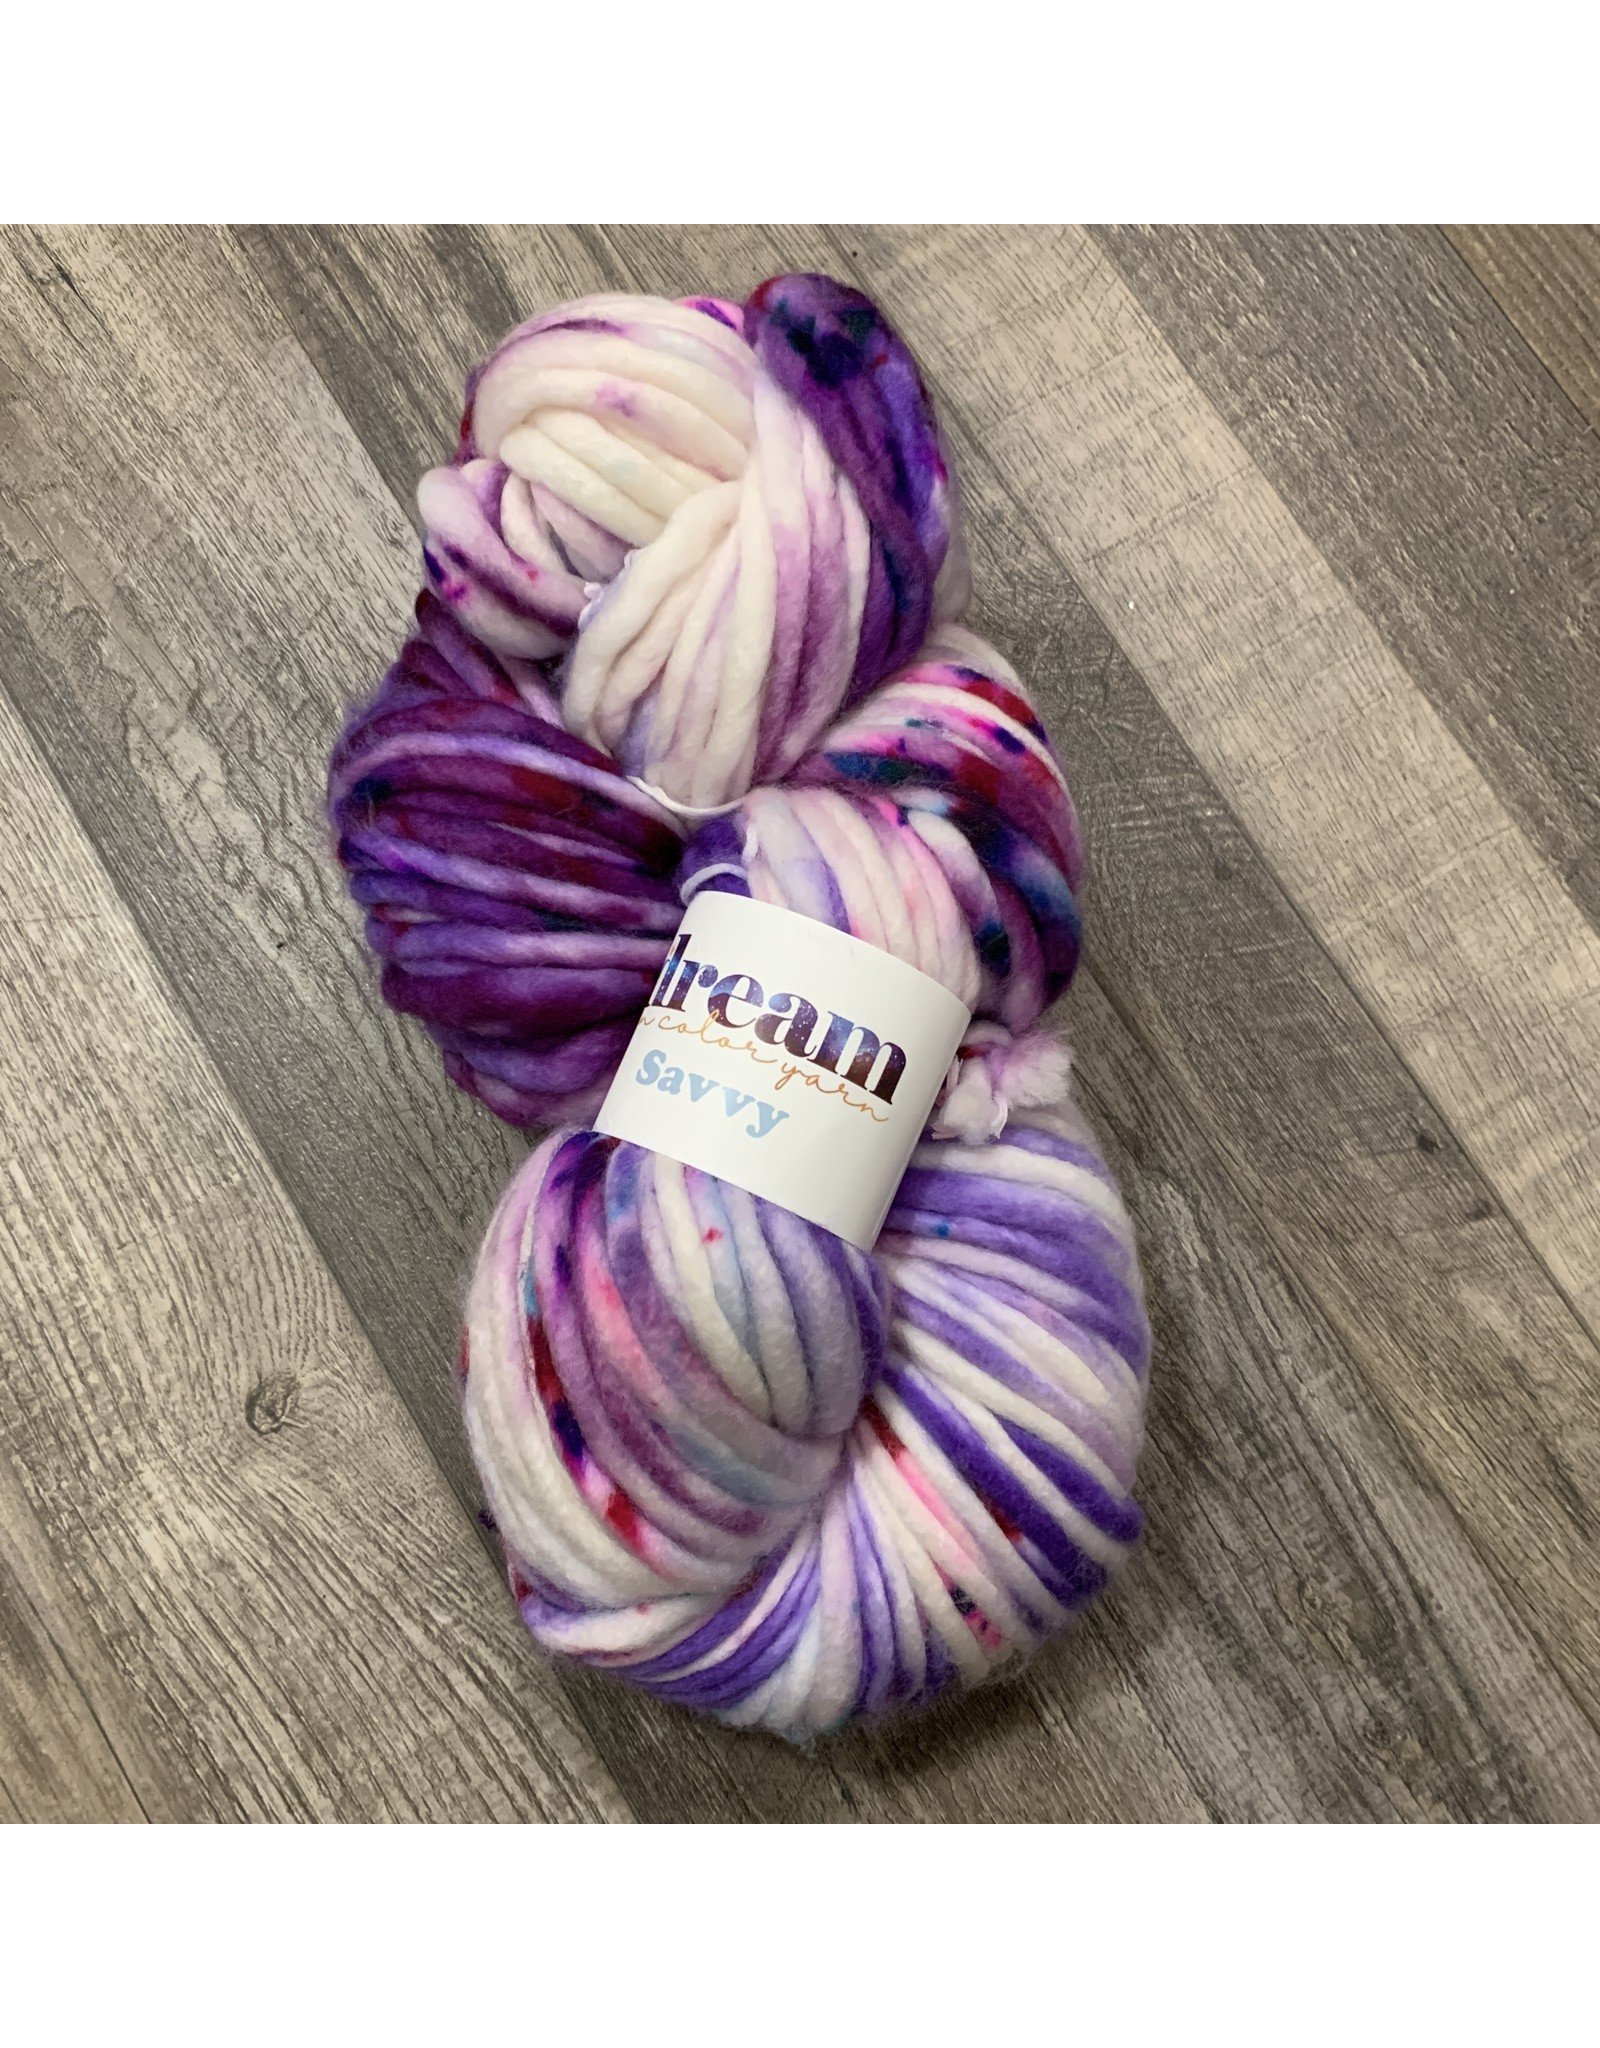 New! Sock Yarn from Dream in Color Yarn. - Creative Yarns